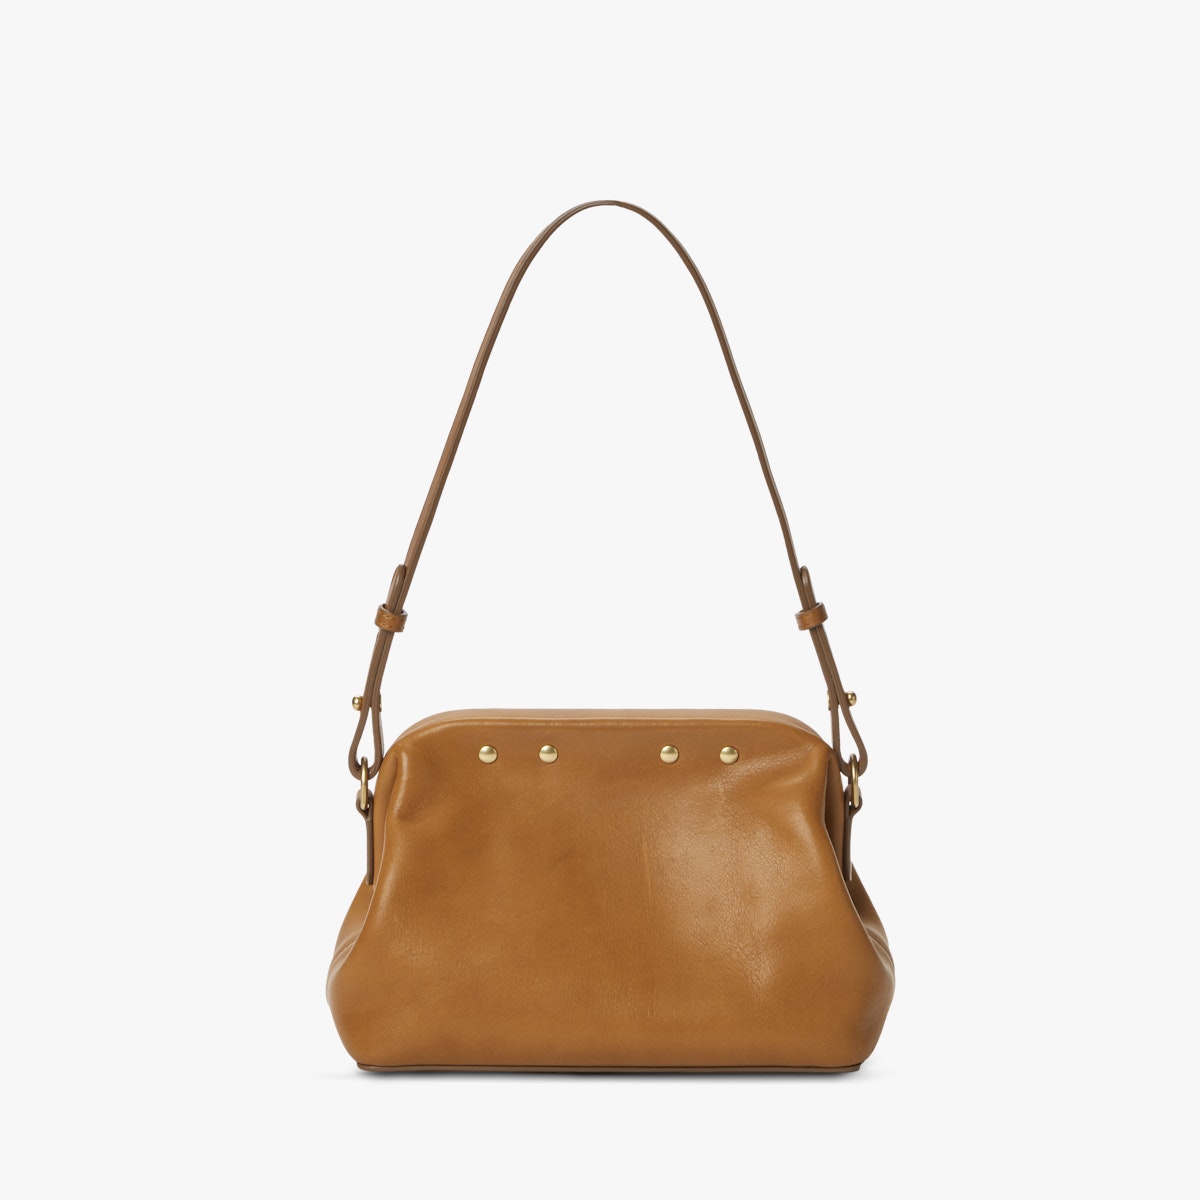 Women's Rivet Leather Clutch Bag